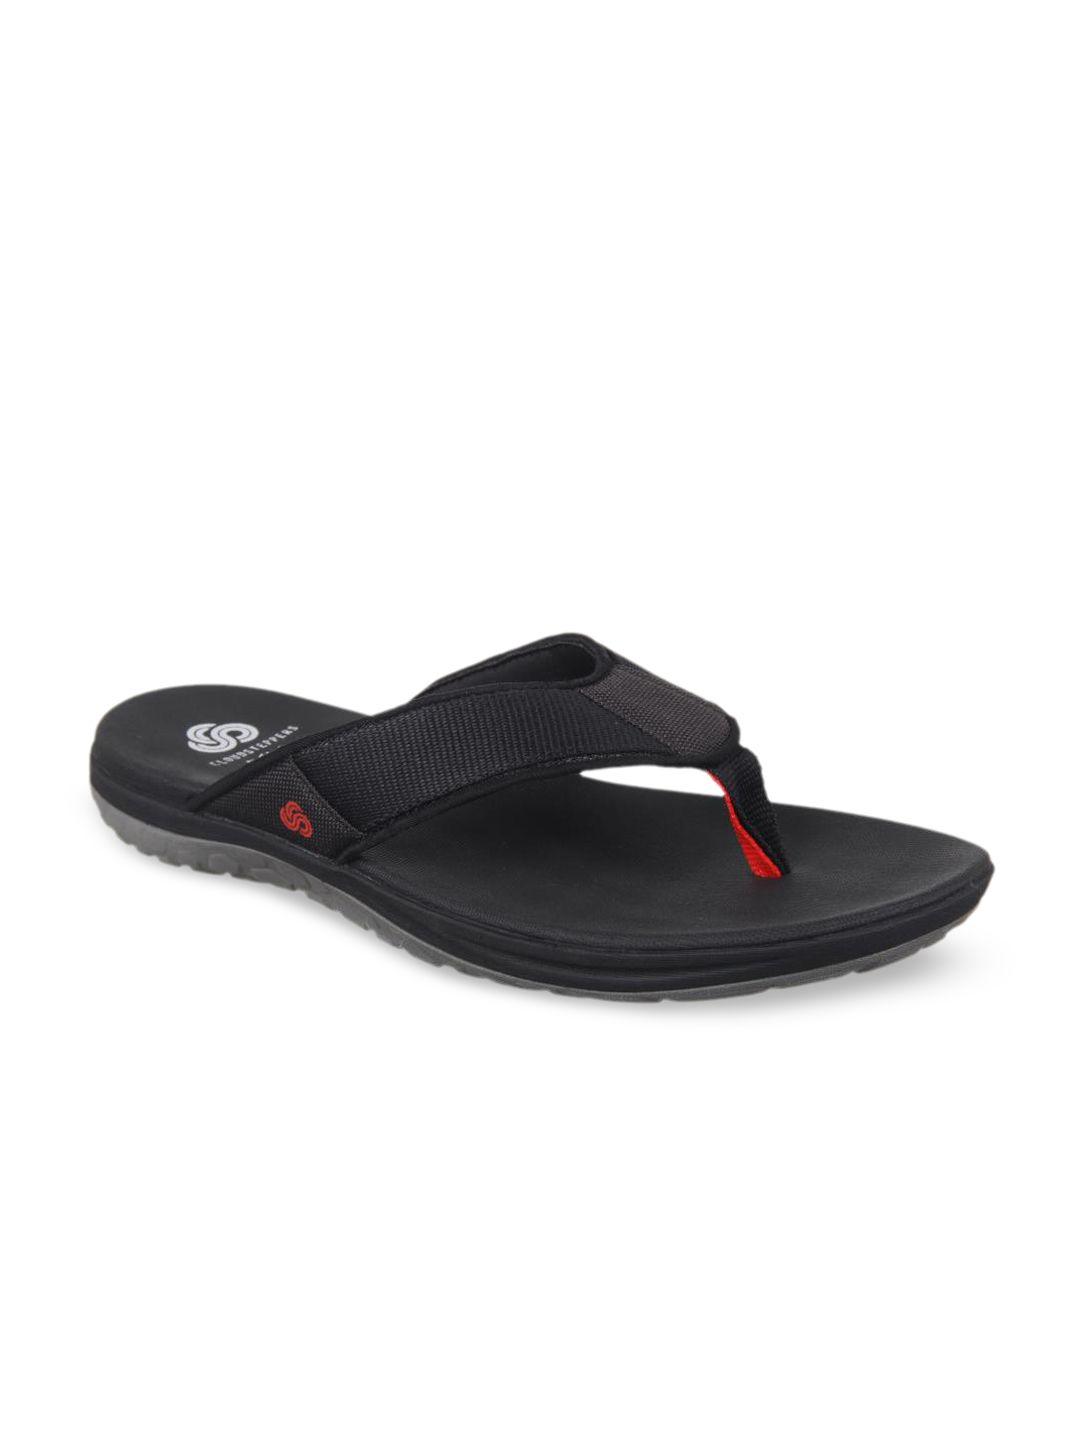 clarks-men-black-sandals